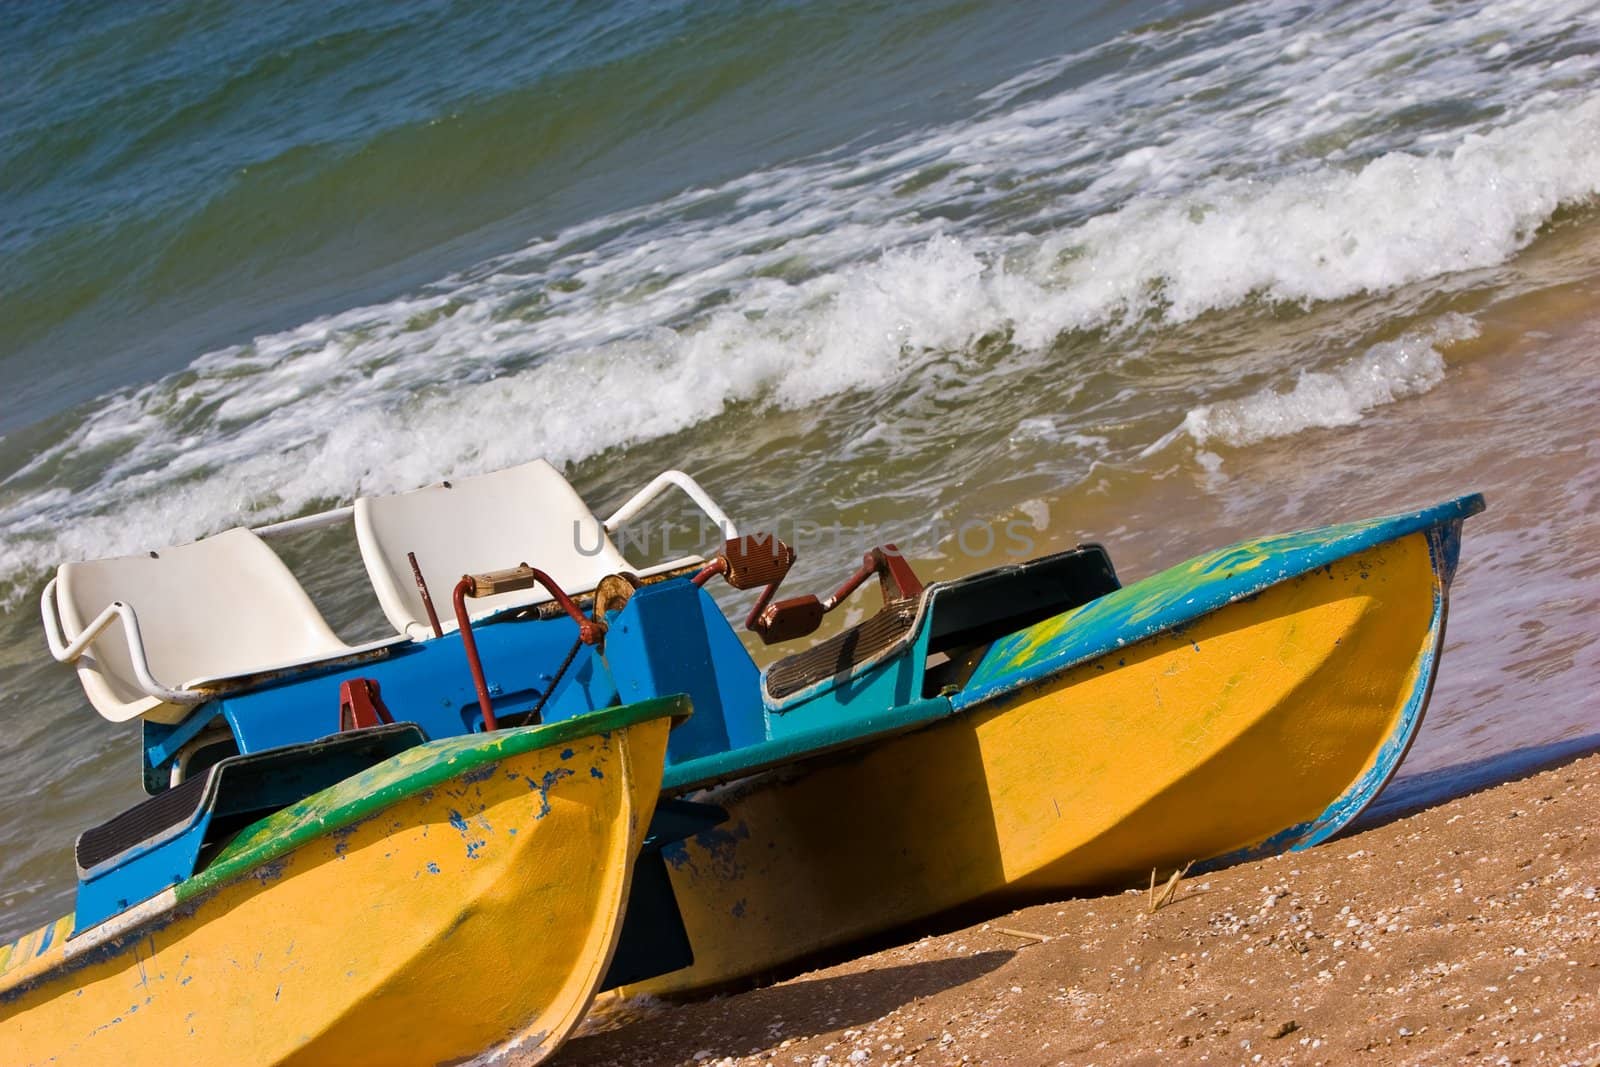 leisure series: promenade catamaran on the beach of stormy sea